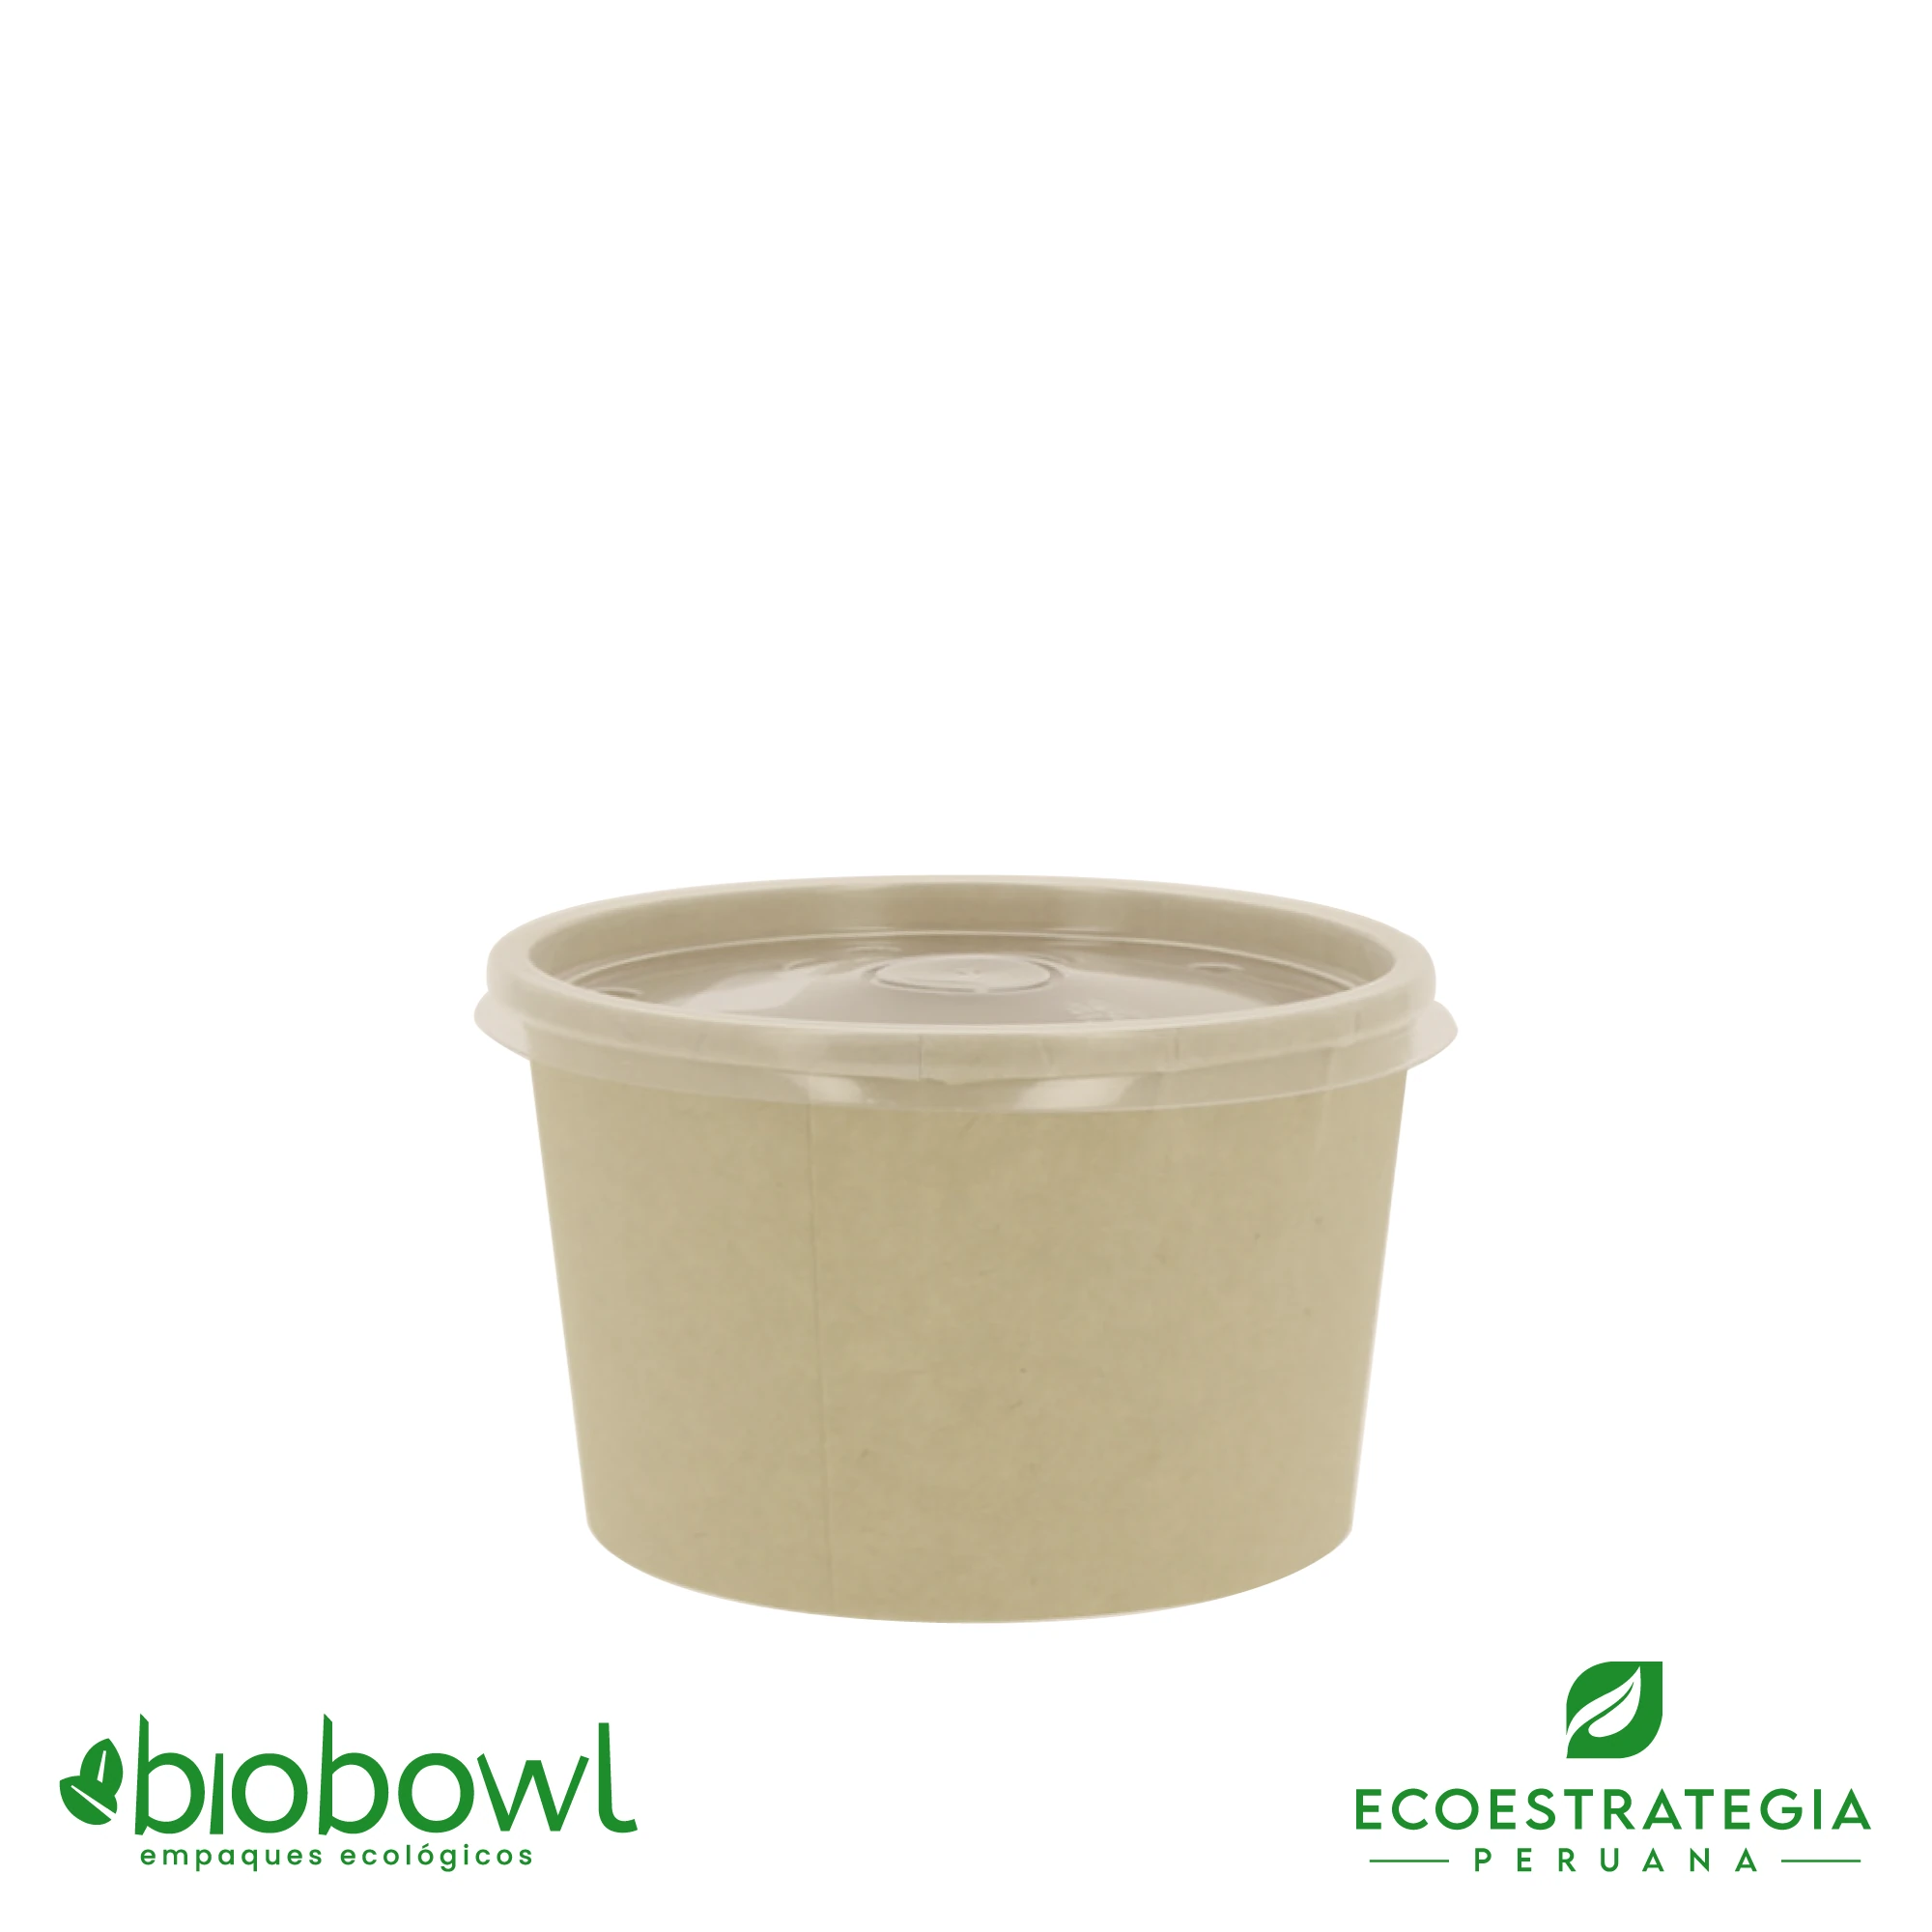 Este envase biodegradable es un bowl 8oz hecho de bambú. Envases descartables con gramaje ideal, cotiza tus vasos para helados, táper para sopa, bowls sopero